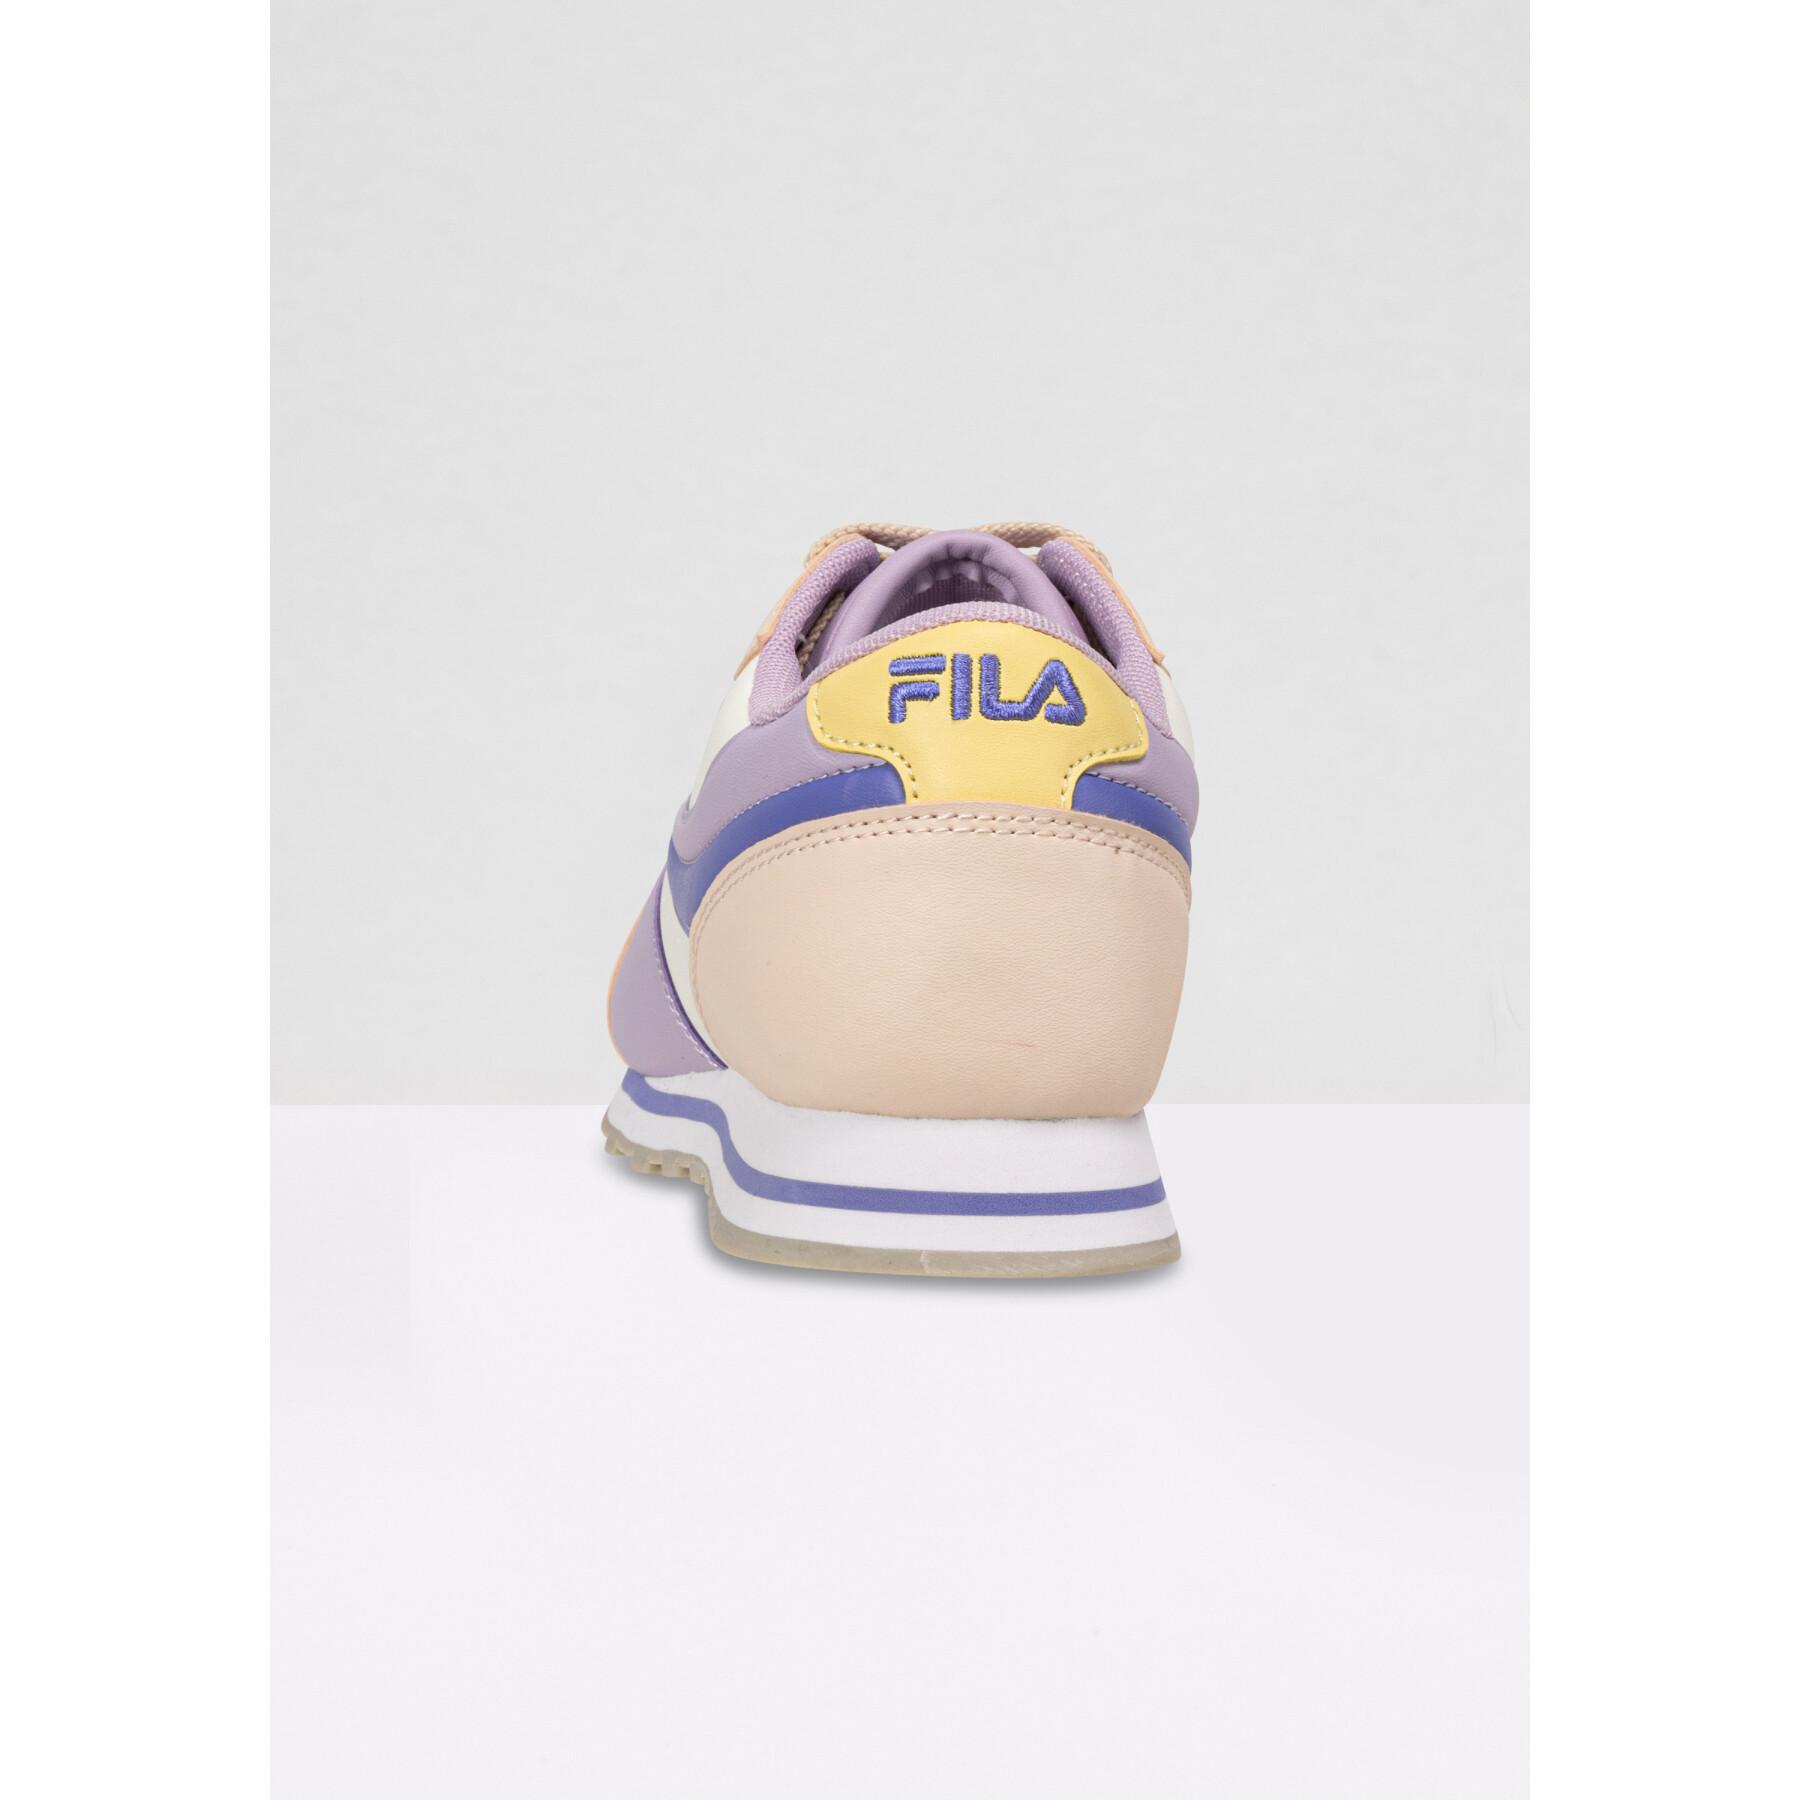 Children\'s sneakers Fila Orbit - Fila - Brands - Lifestyle